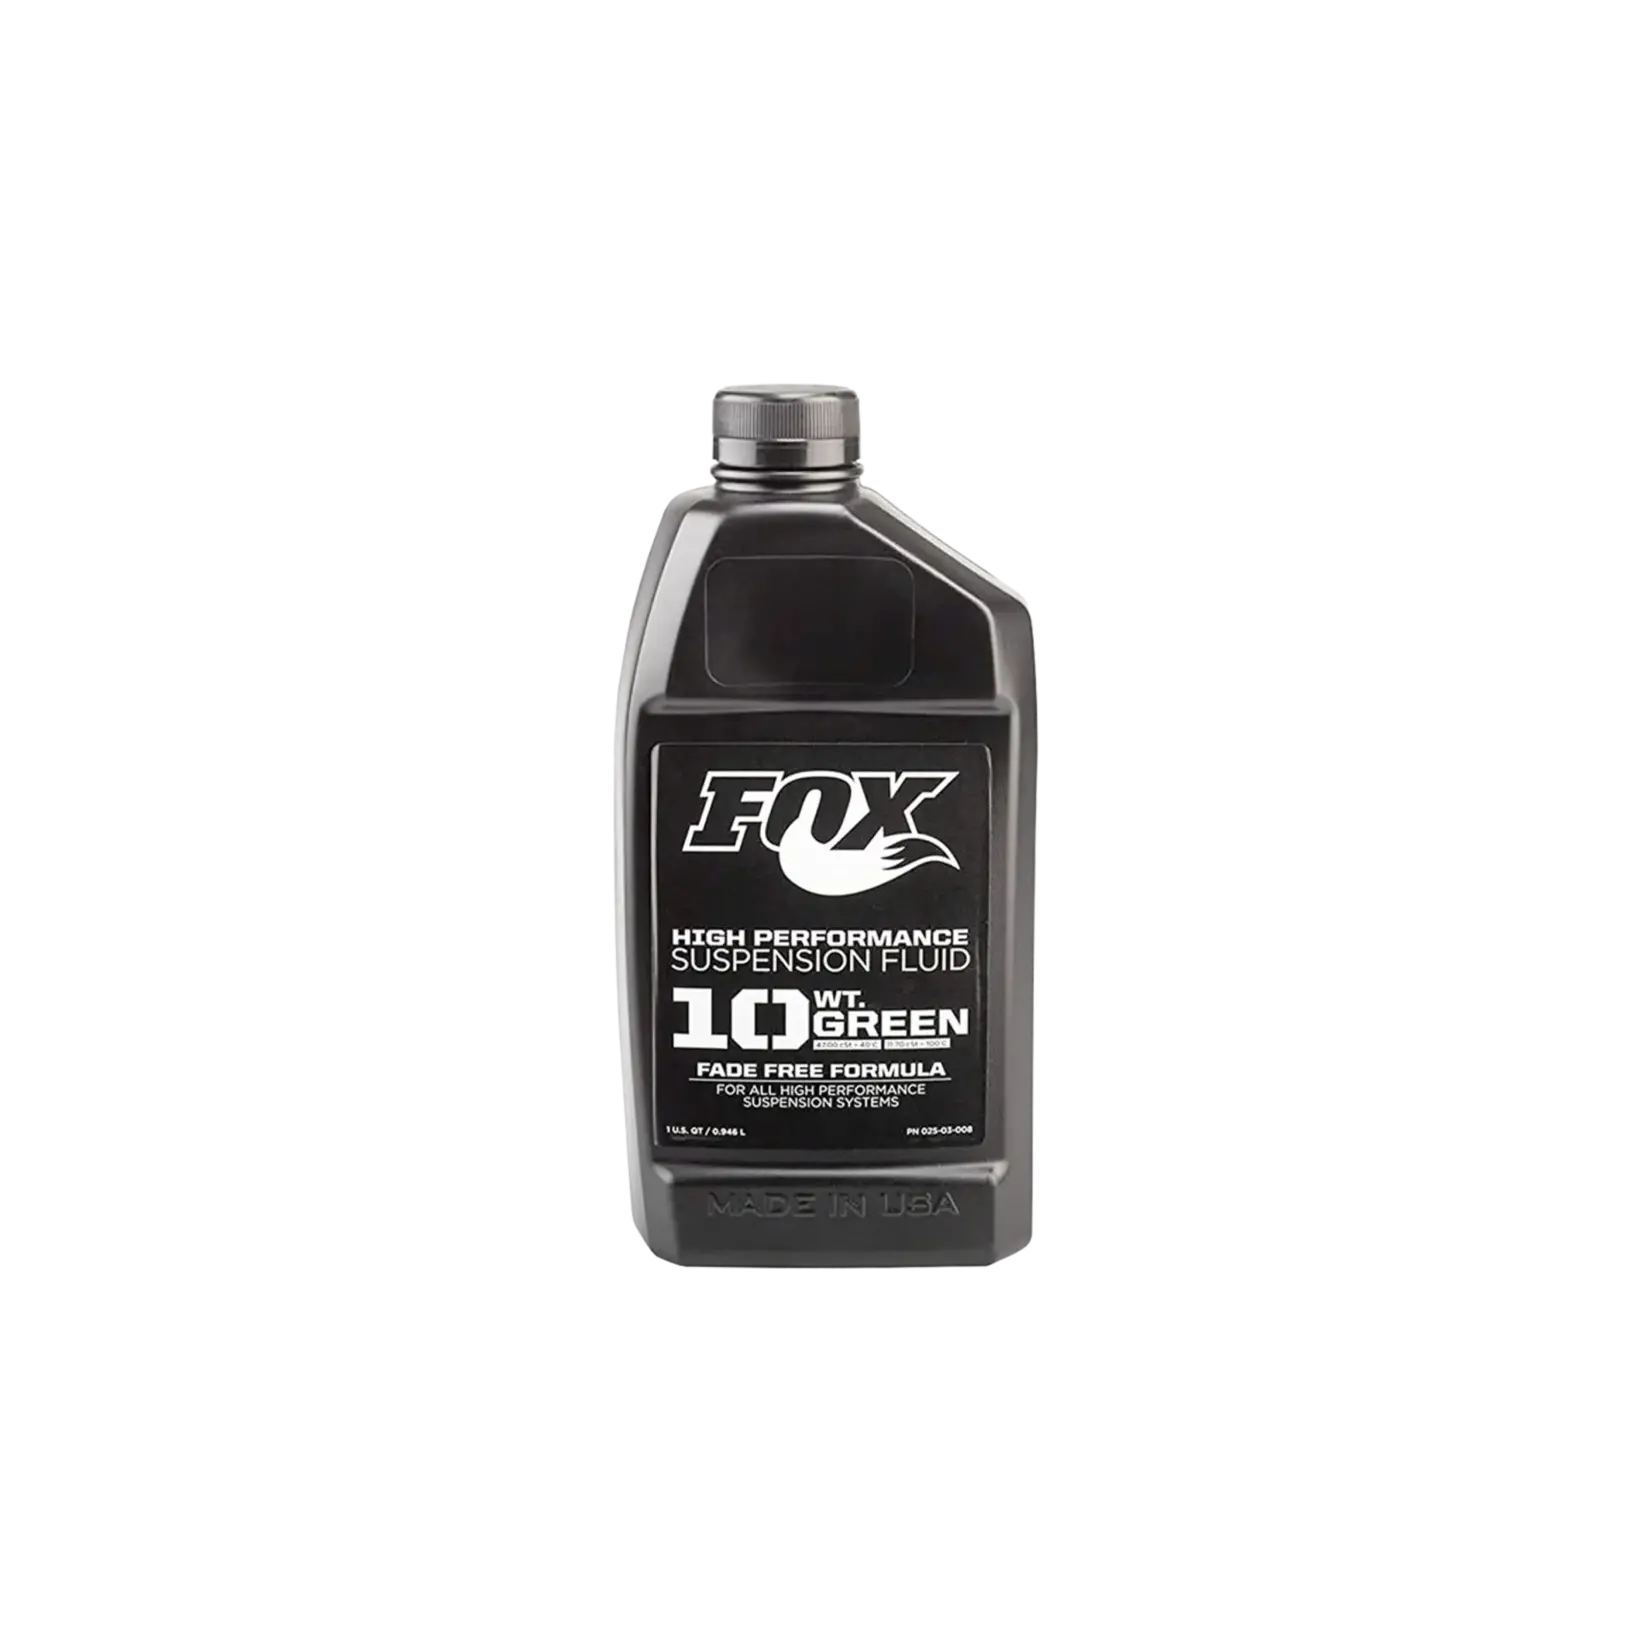 FOX Oil: AM,FOX Suspension Fluid [32 oz.],10 WT Green